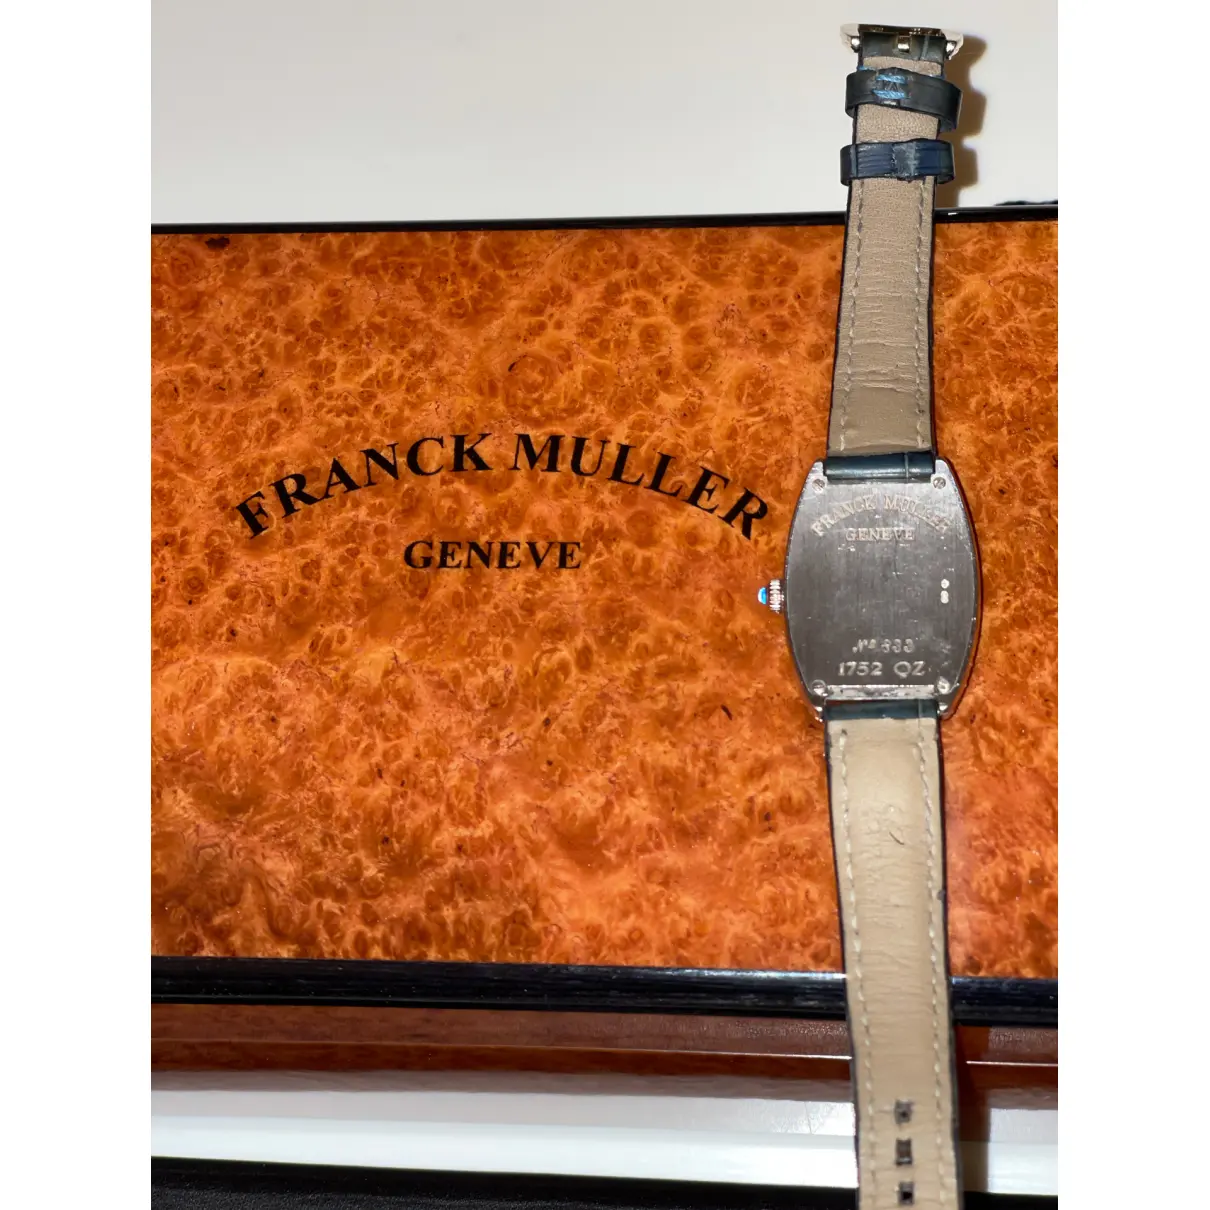 Buy Franck Muller Casablanca white gold watch online